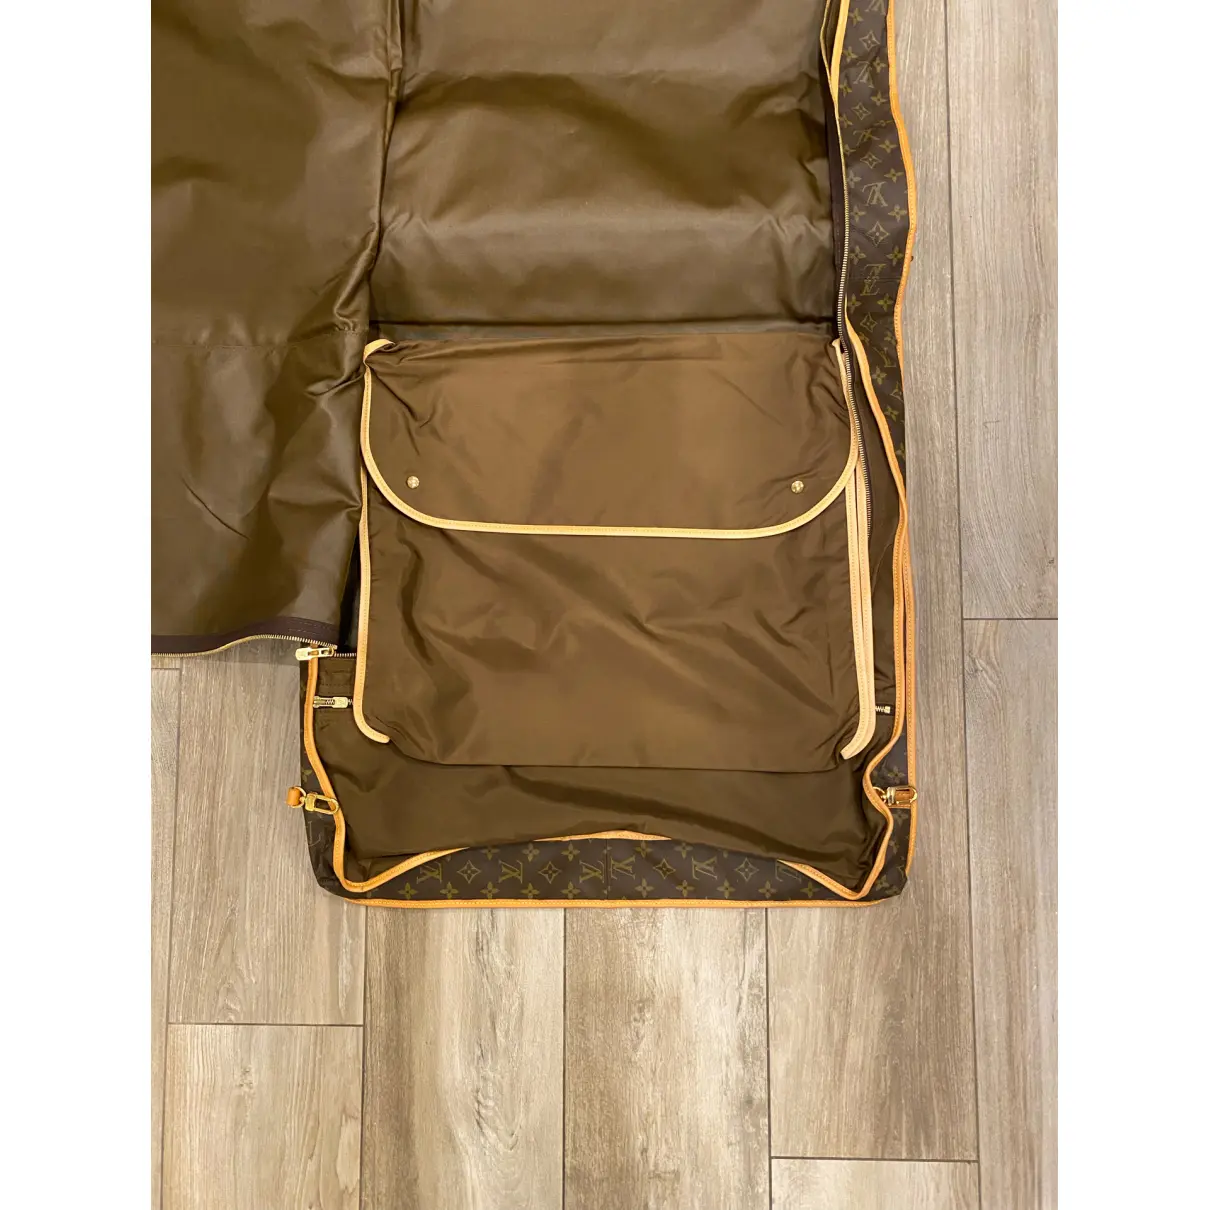 Buy Louis Vuitton Garment cloth travel bag online